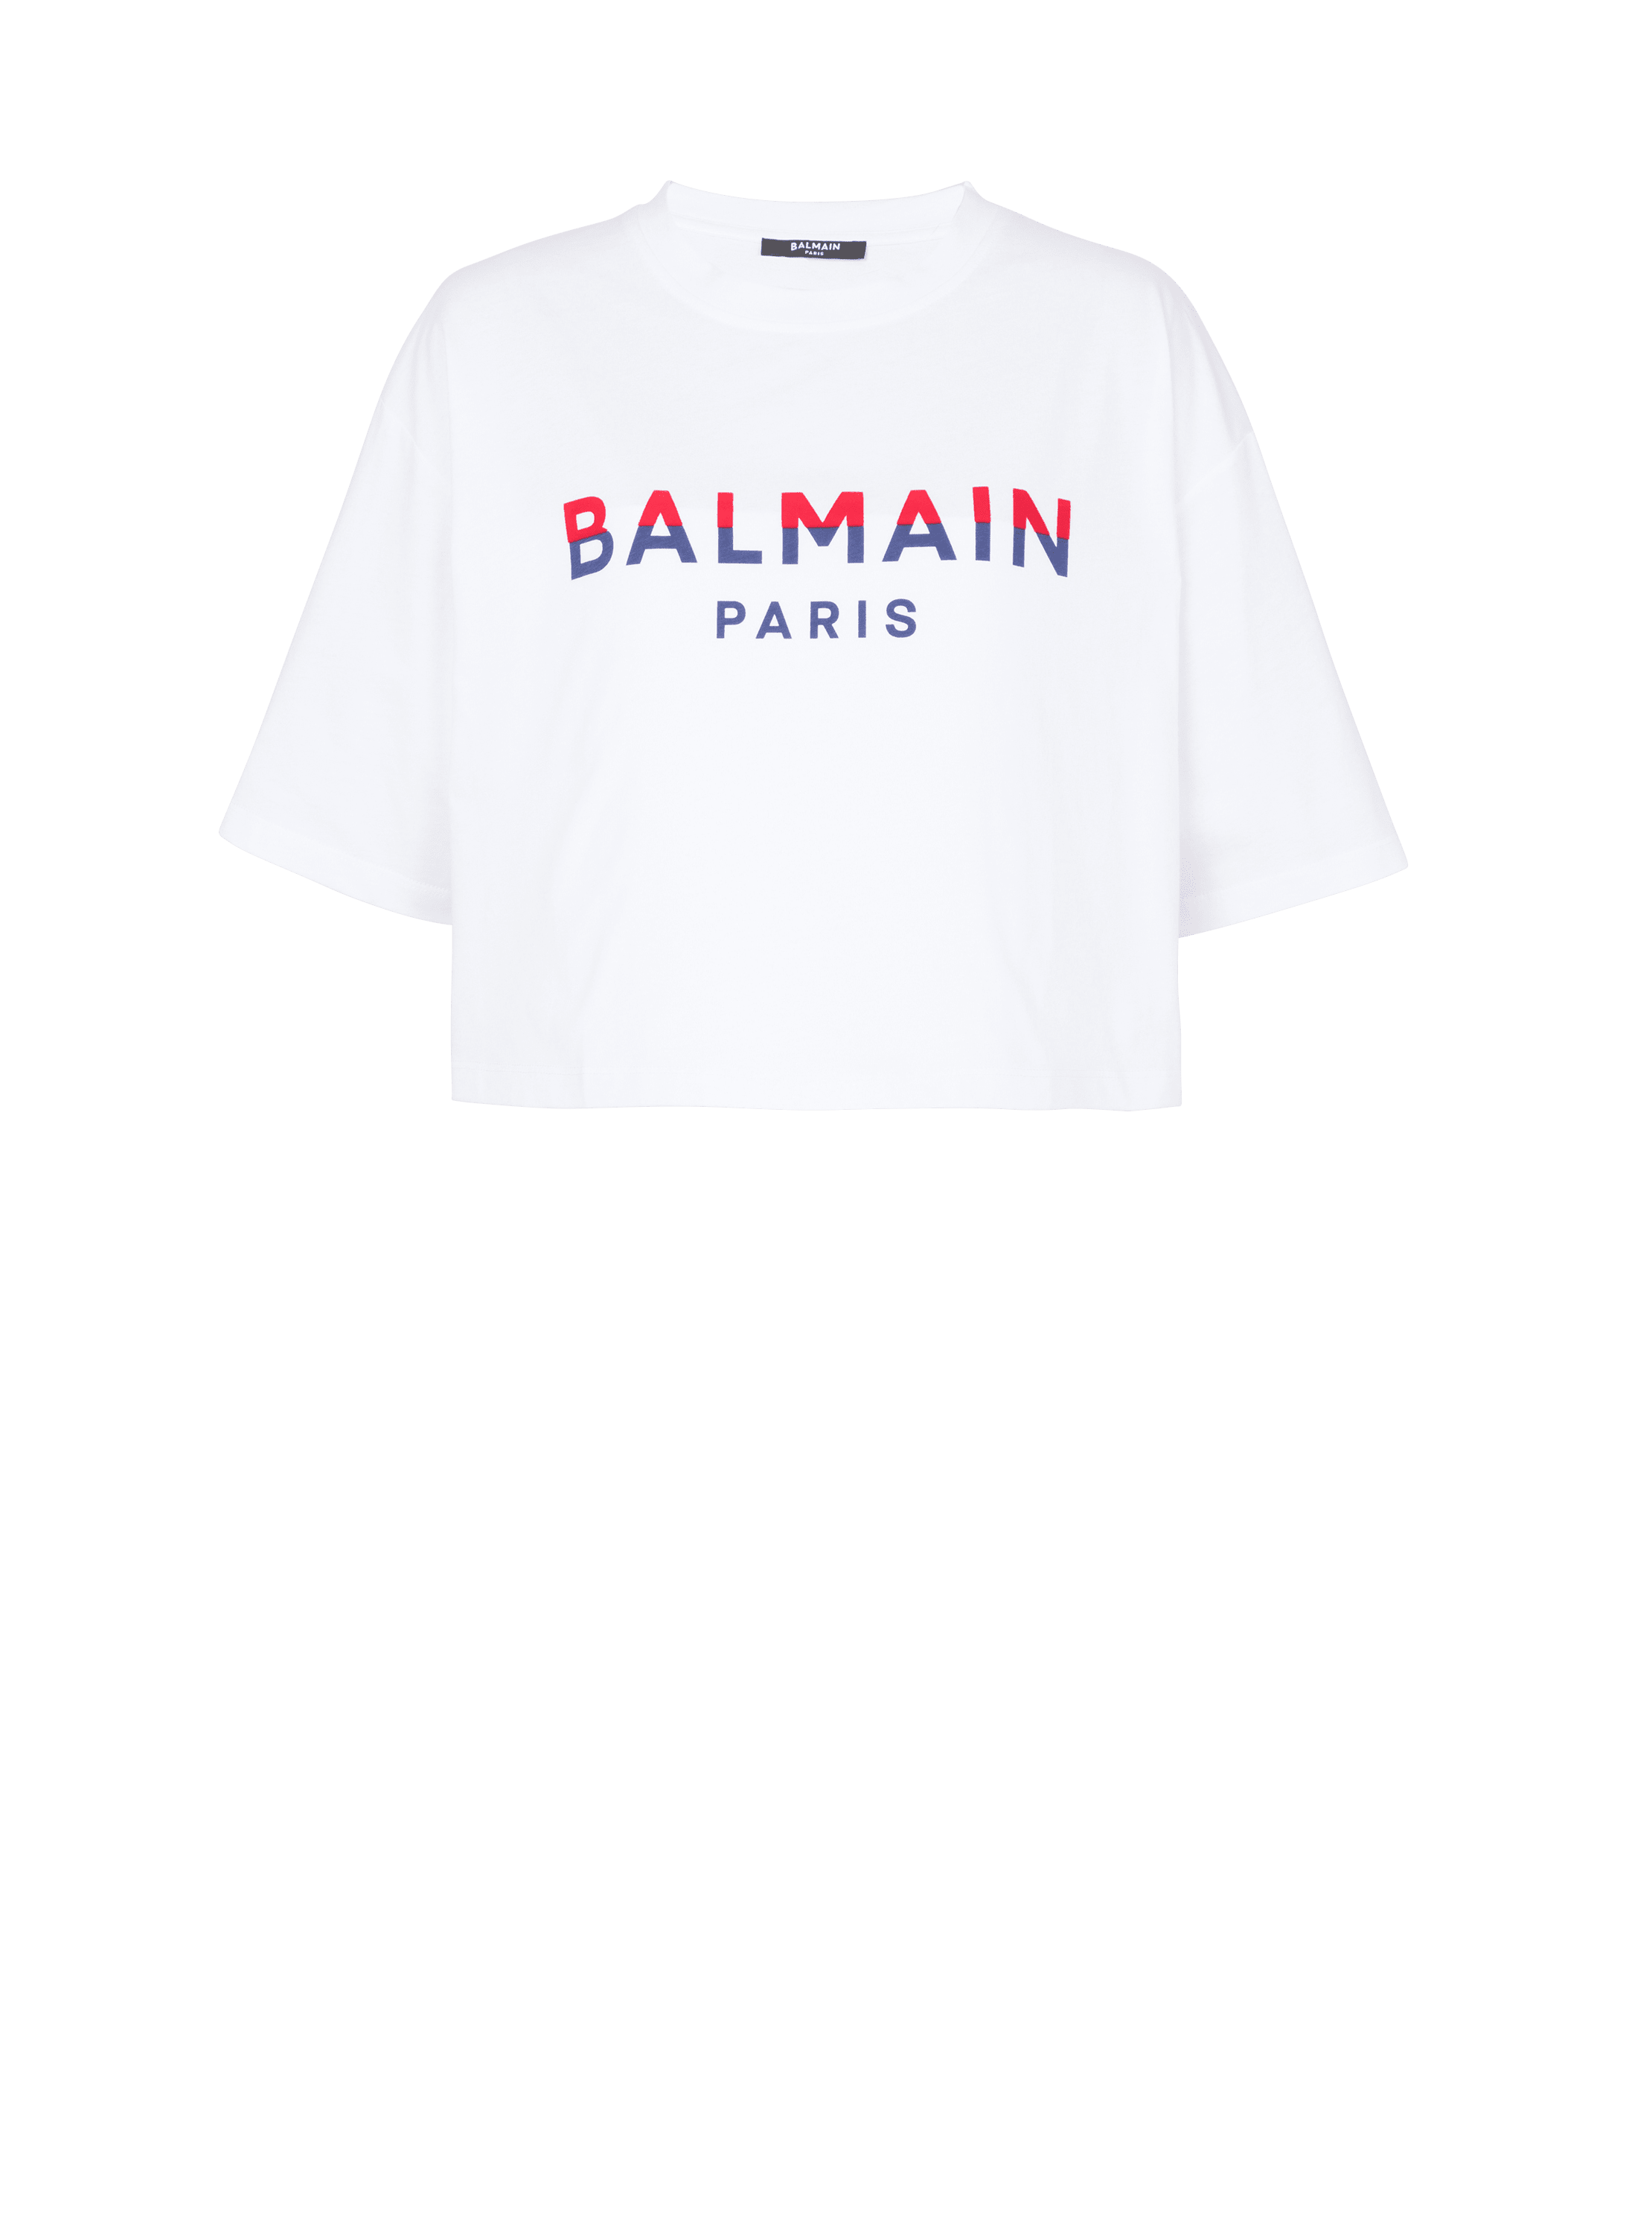 Erobre tro Erobre Flocked Balmain Paris cropped T-Shirt white - Women | BALMAIN